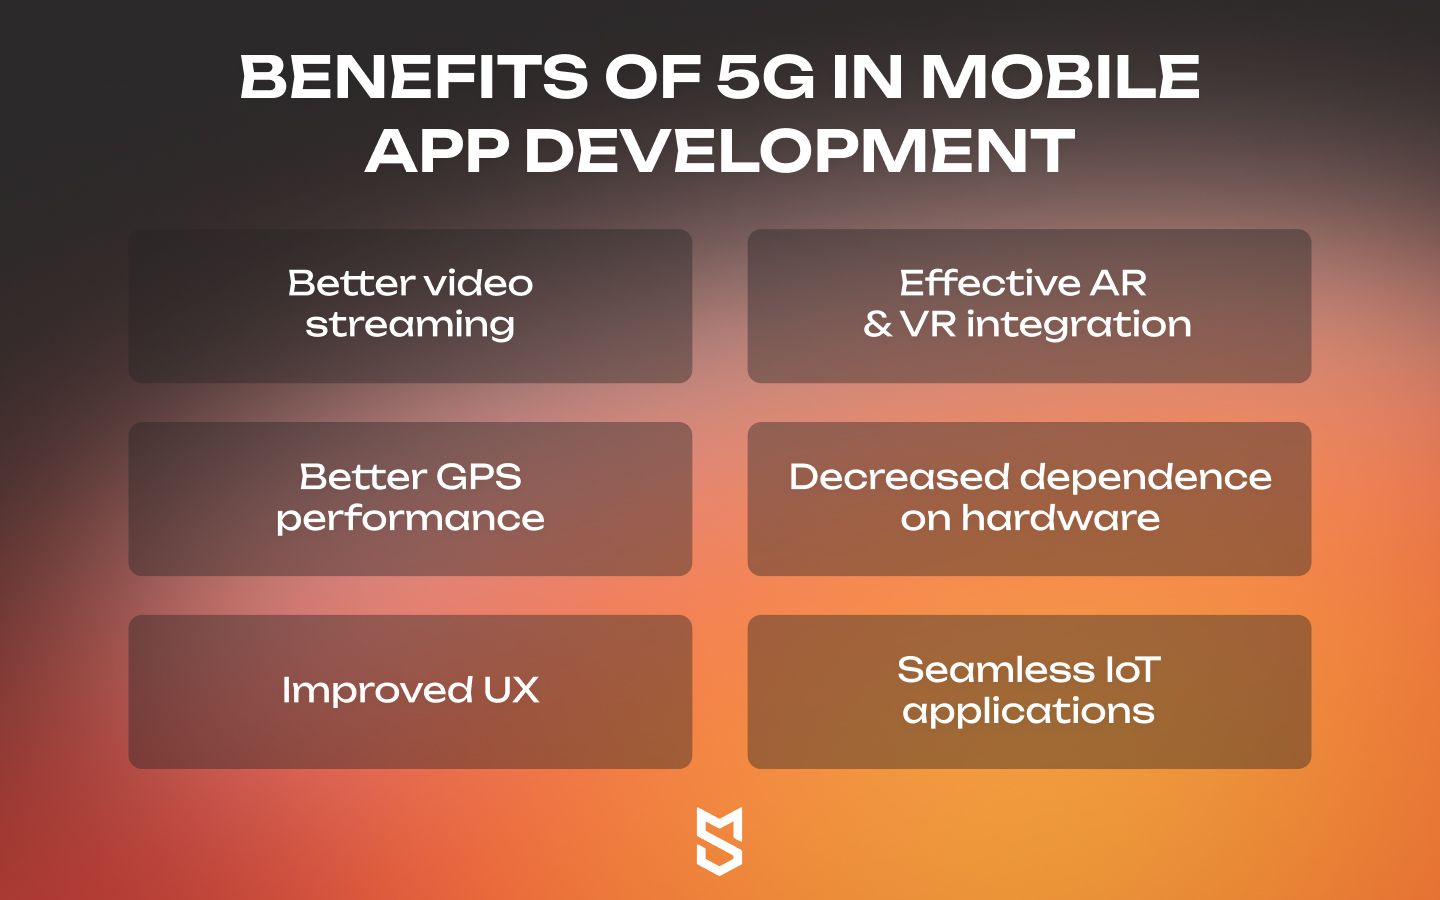 Benefits of 5G in mobile app development